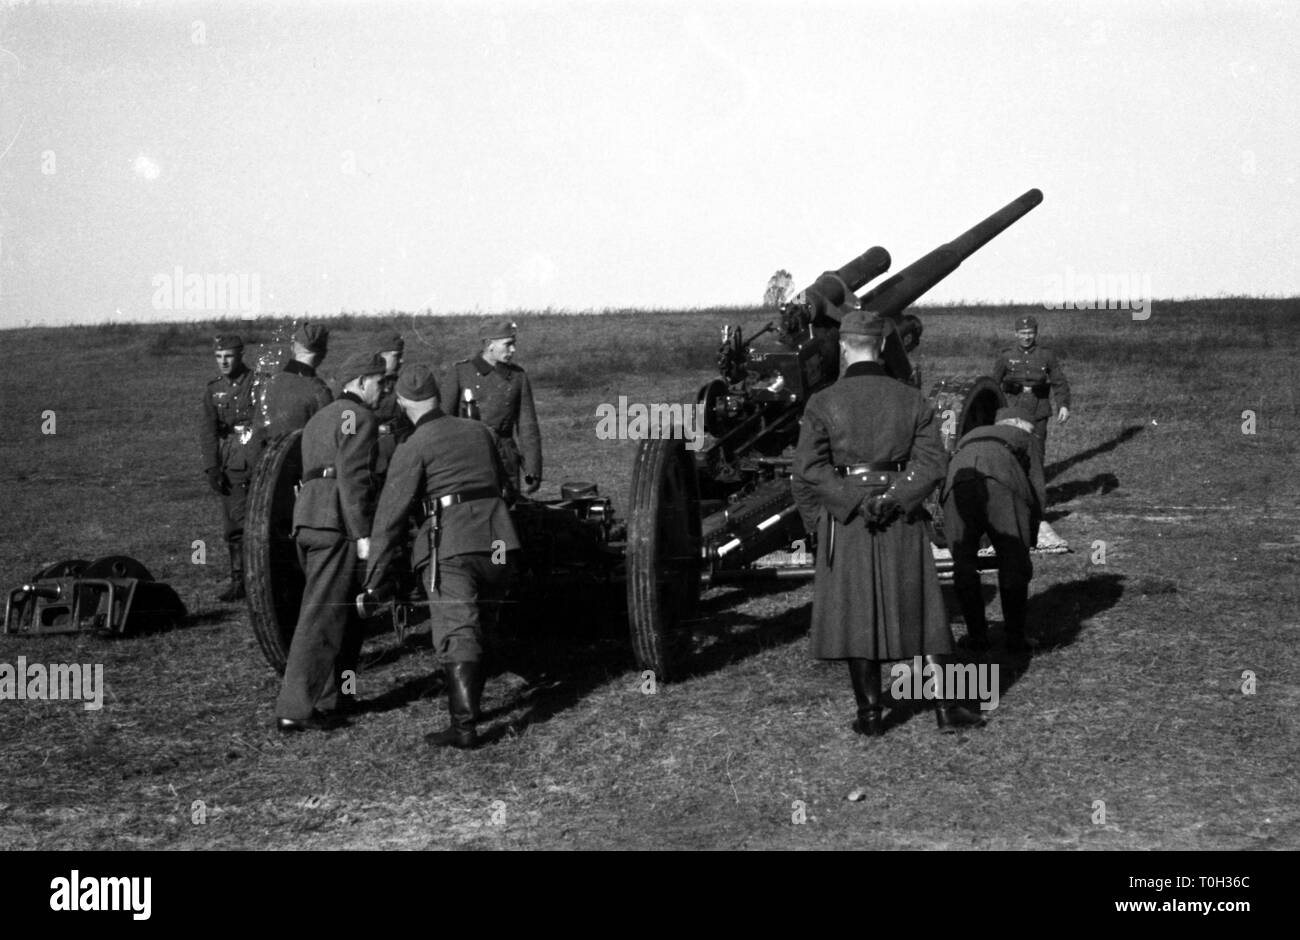 Artillerieausbildung Black and White Stock Photos & Images - Alamy